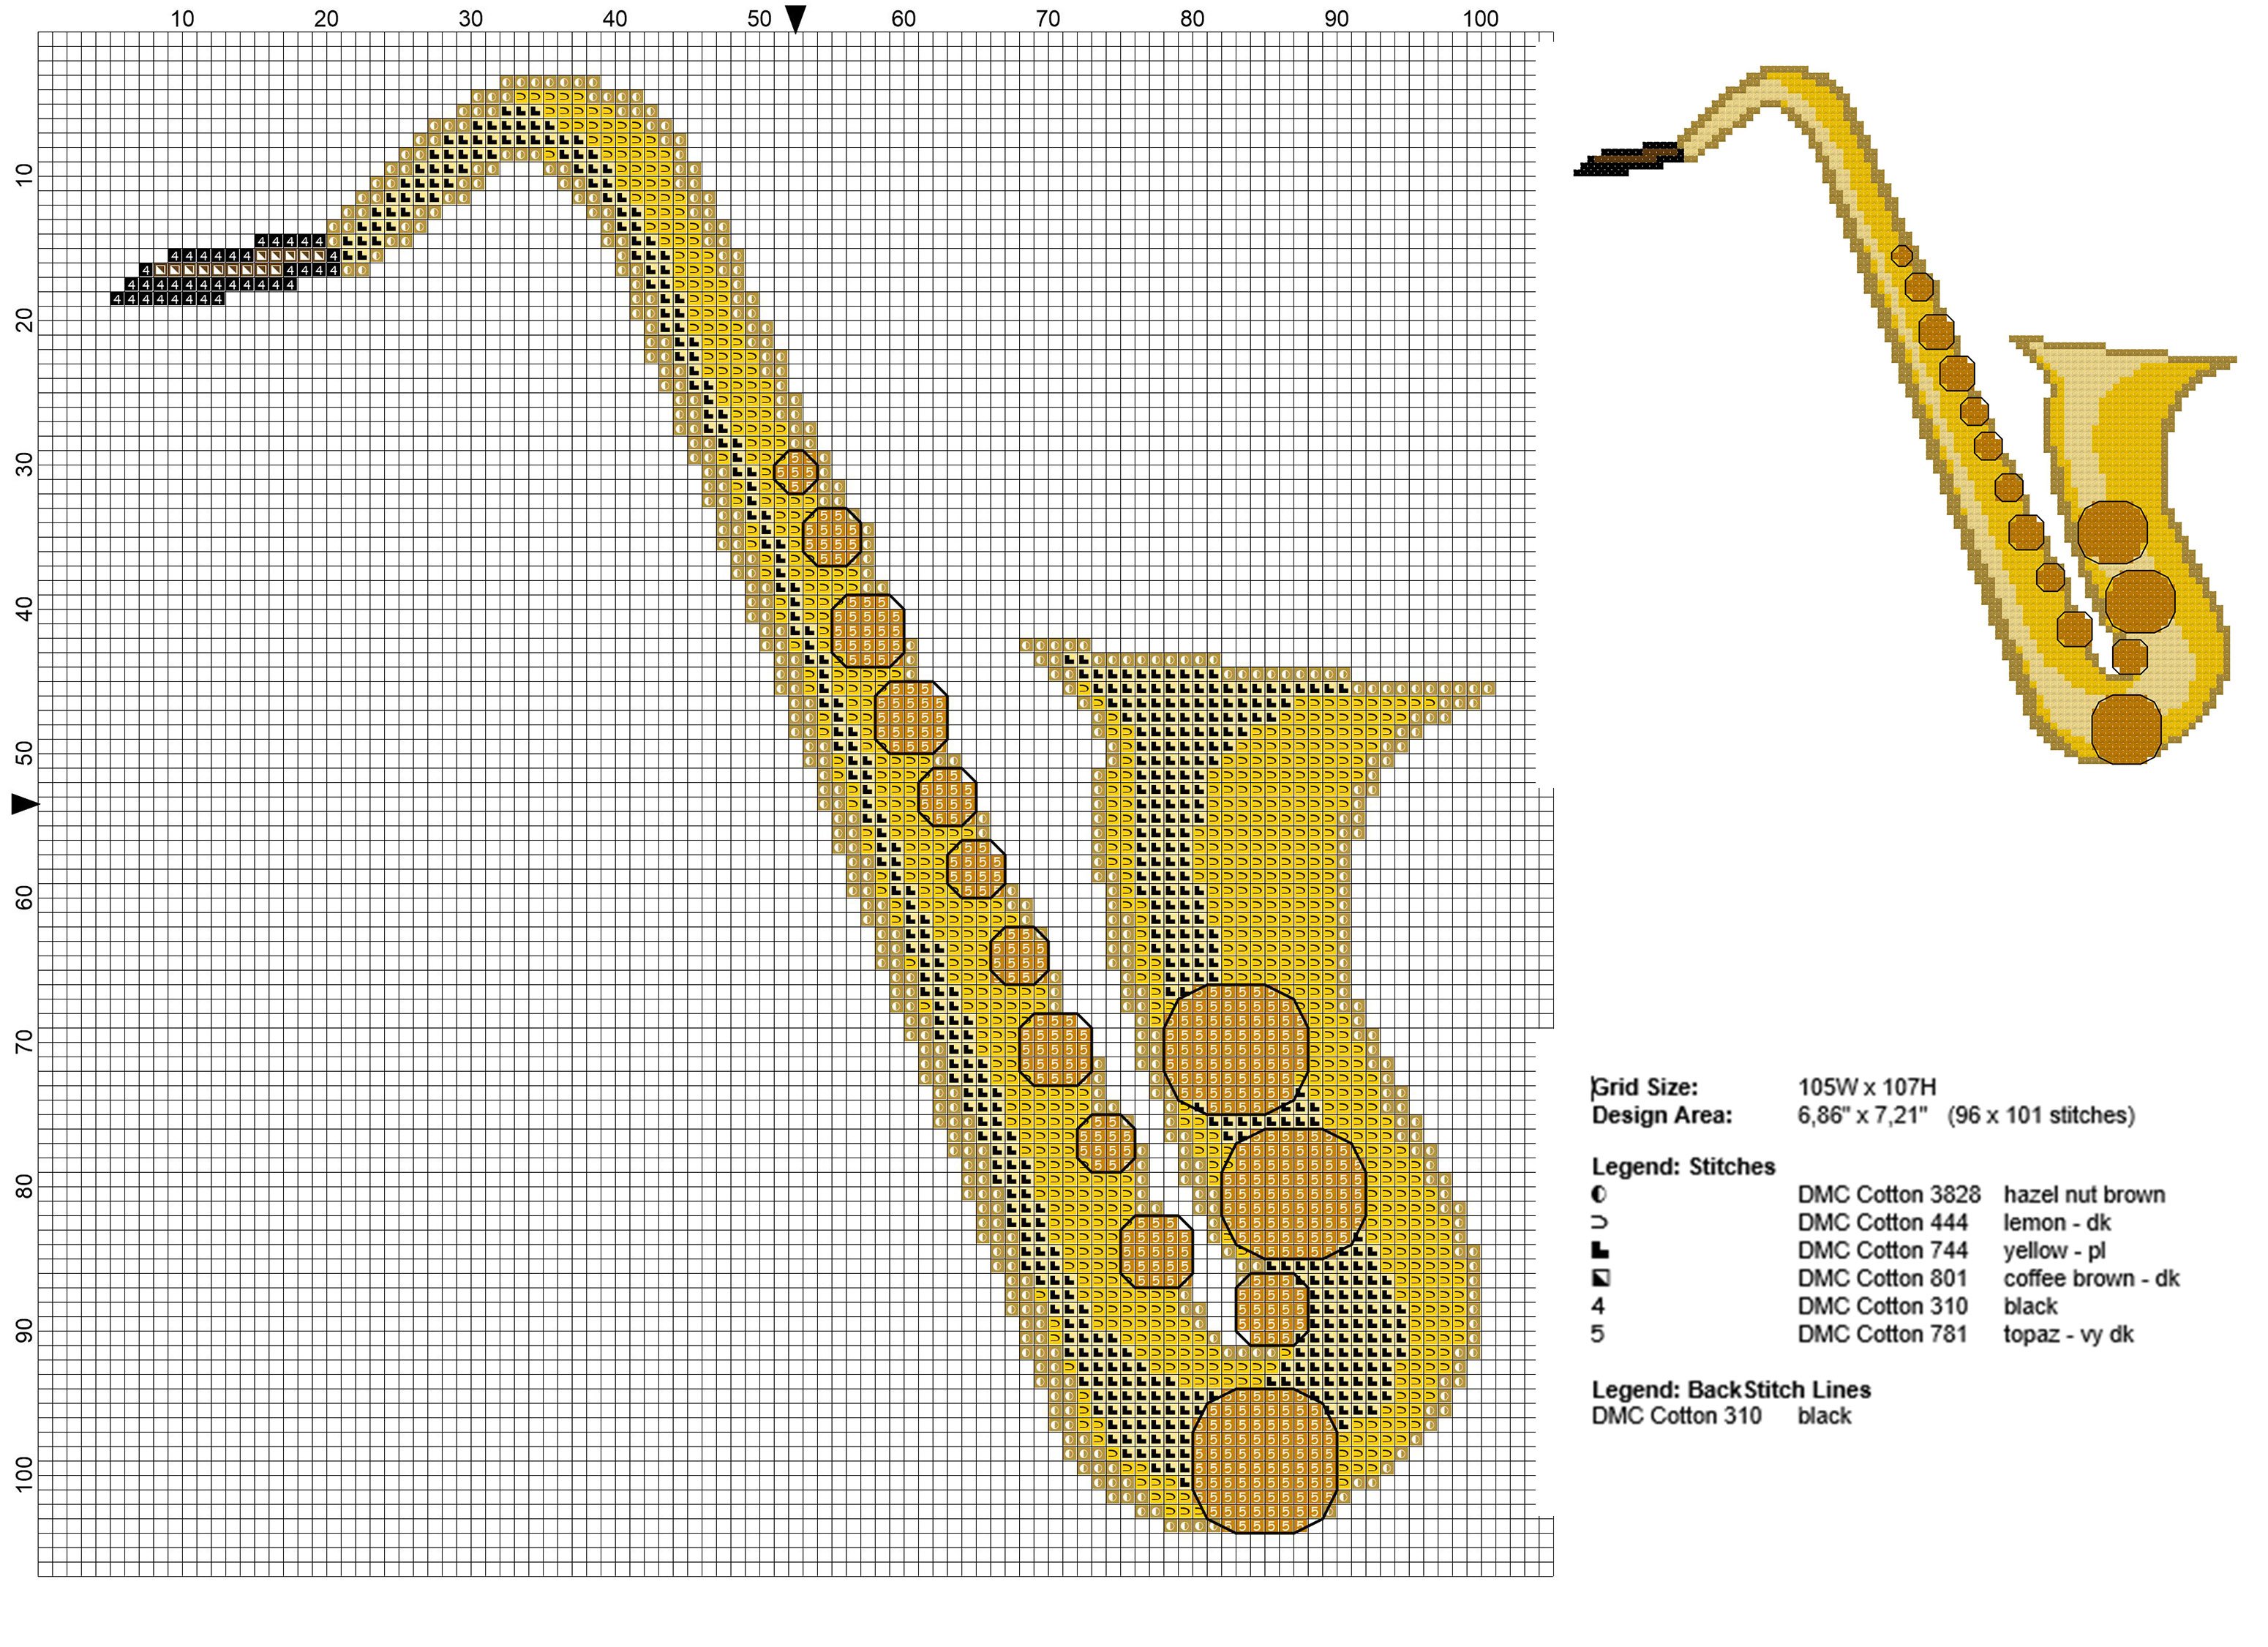 Musical instrument sax free cross stitch pattern download